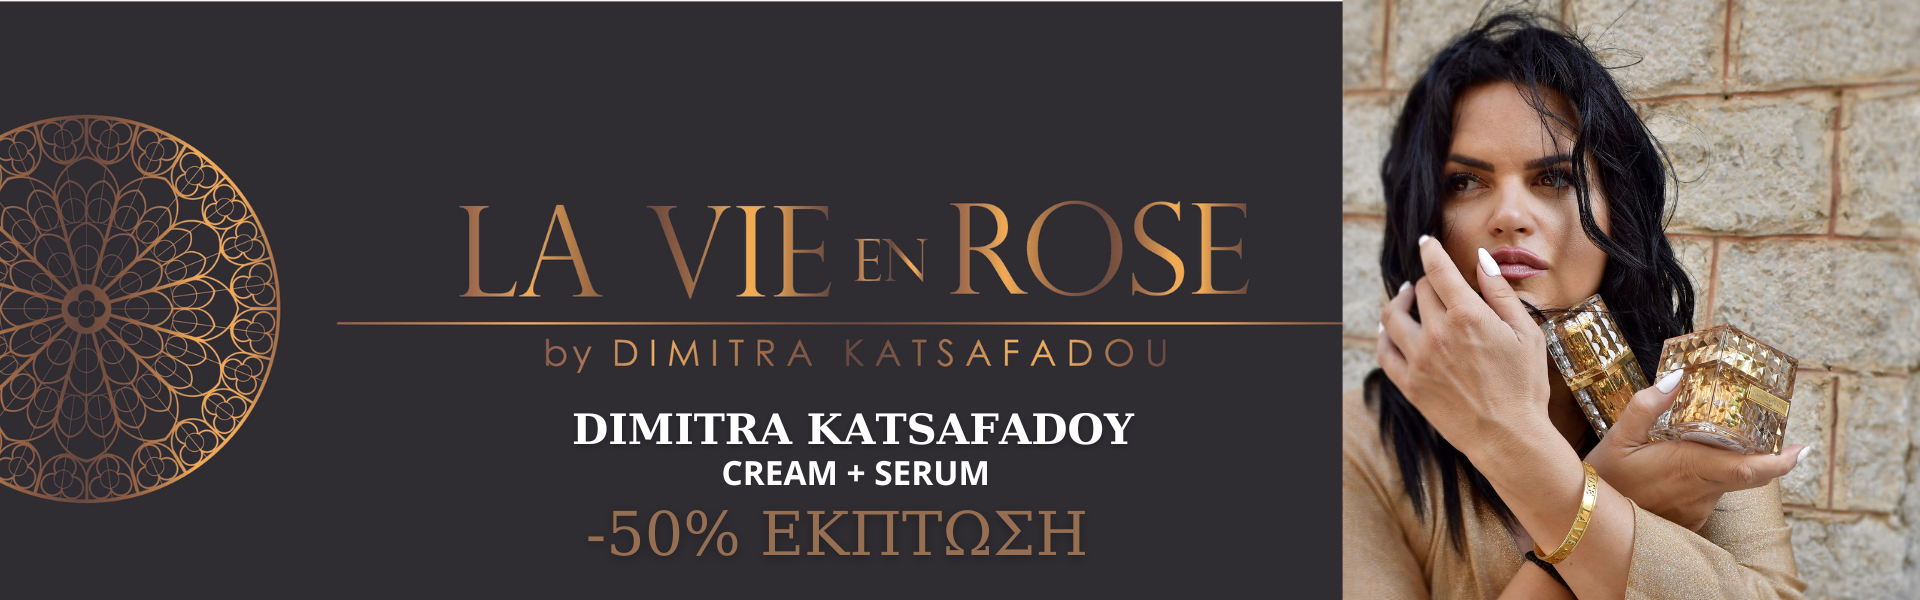 Dimitra Katsafadou Cream + Serum